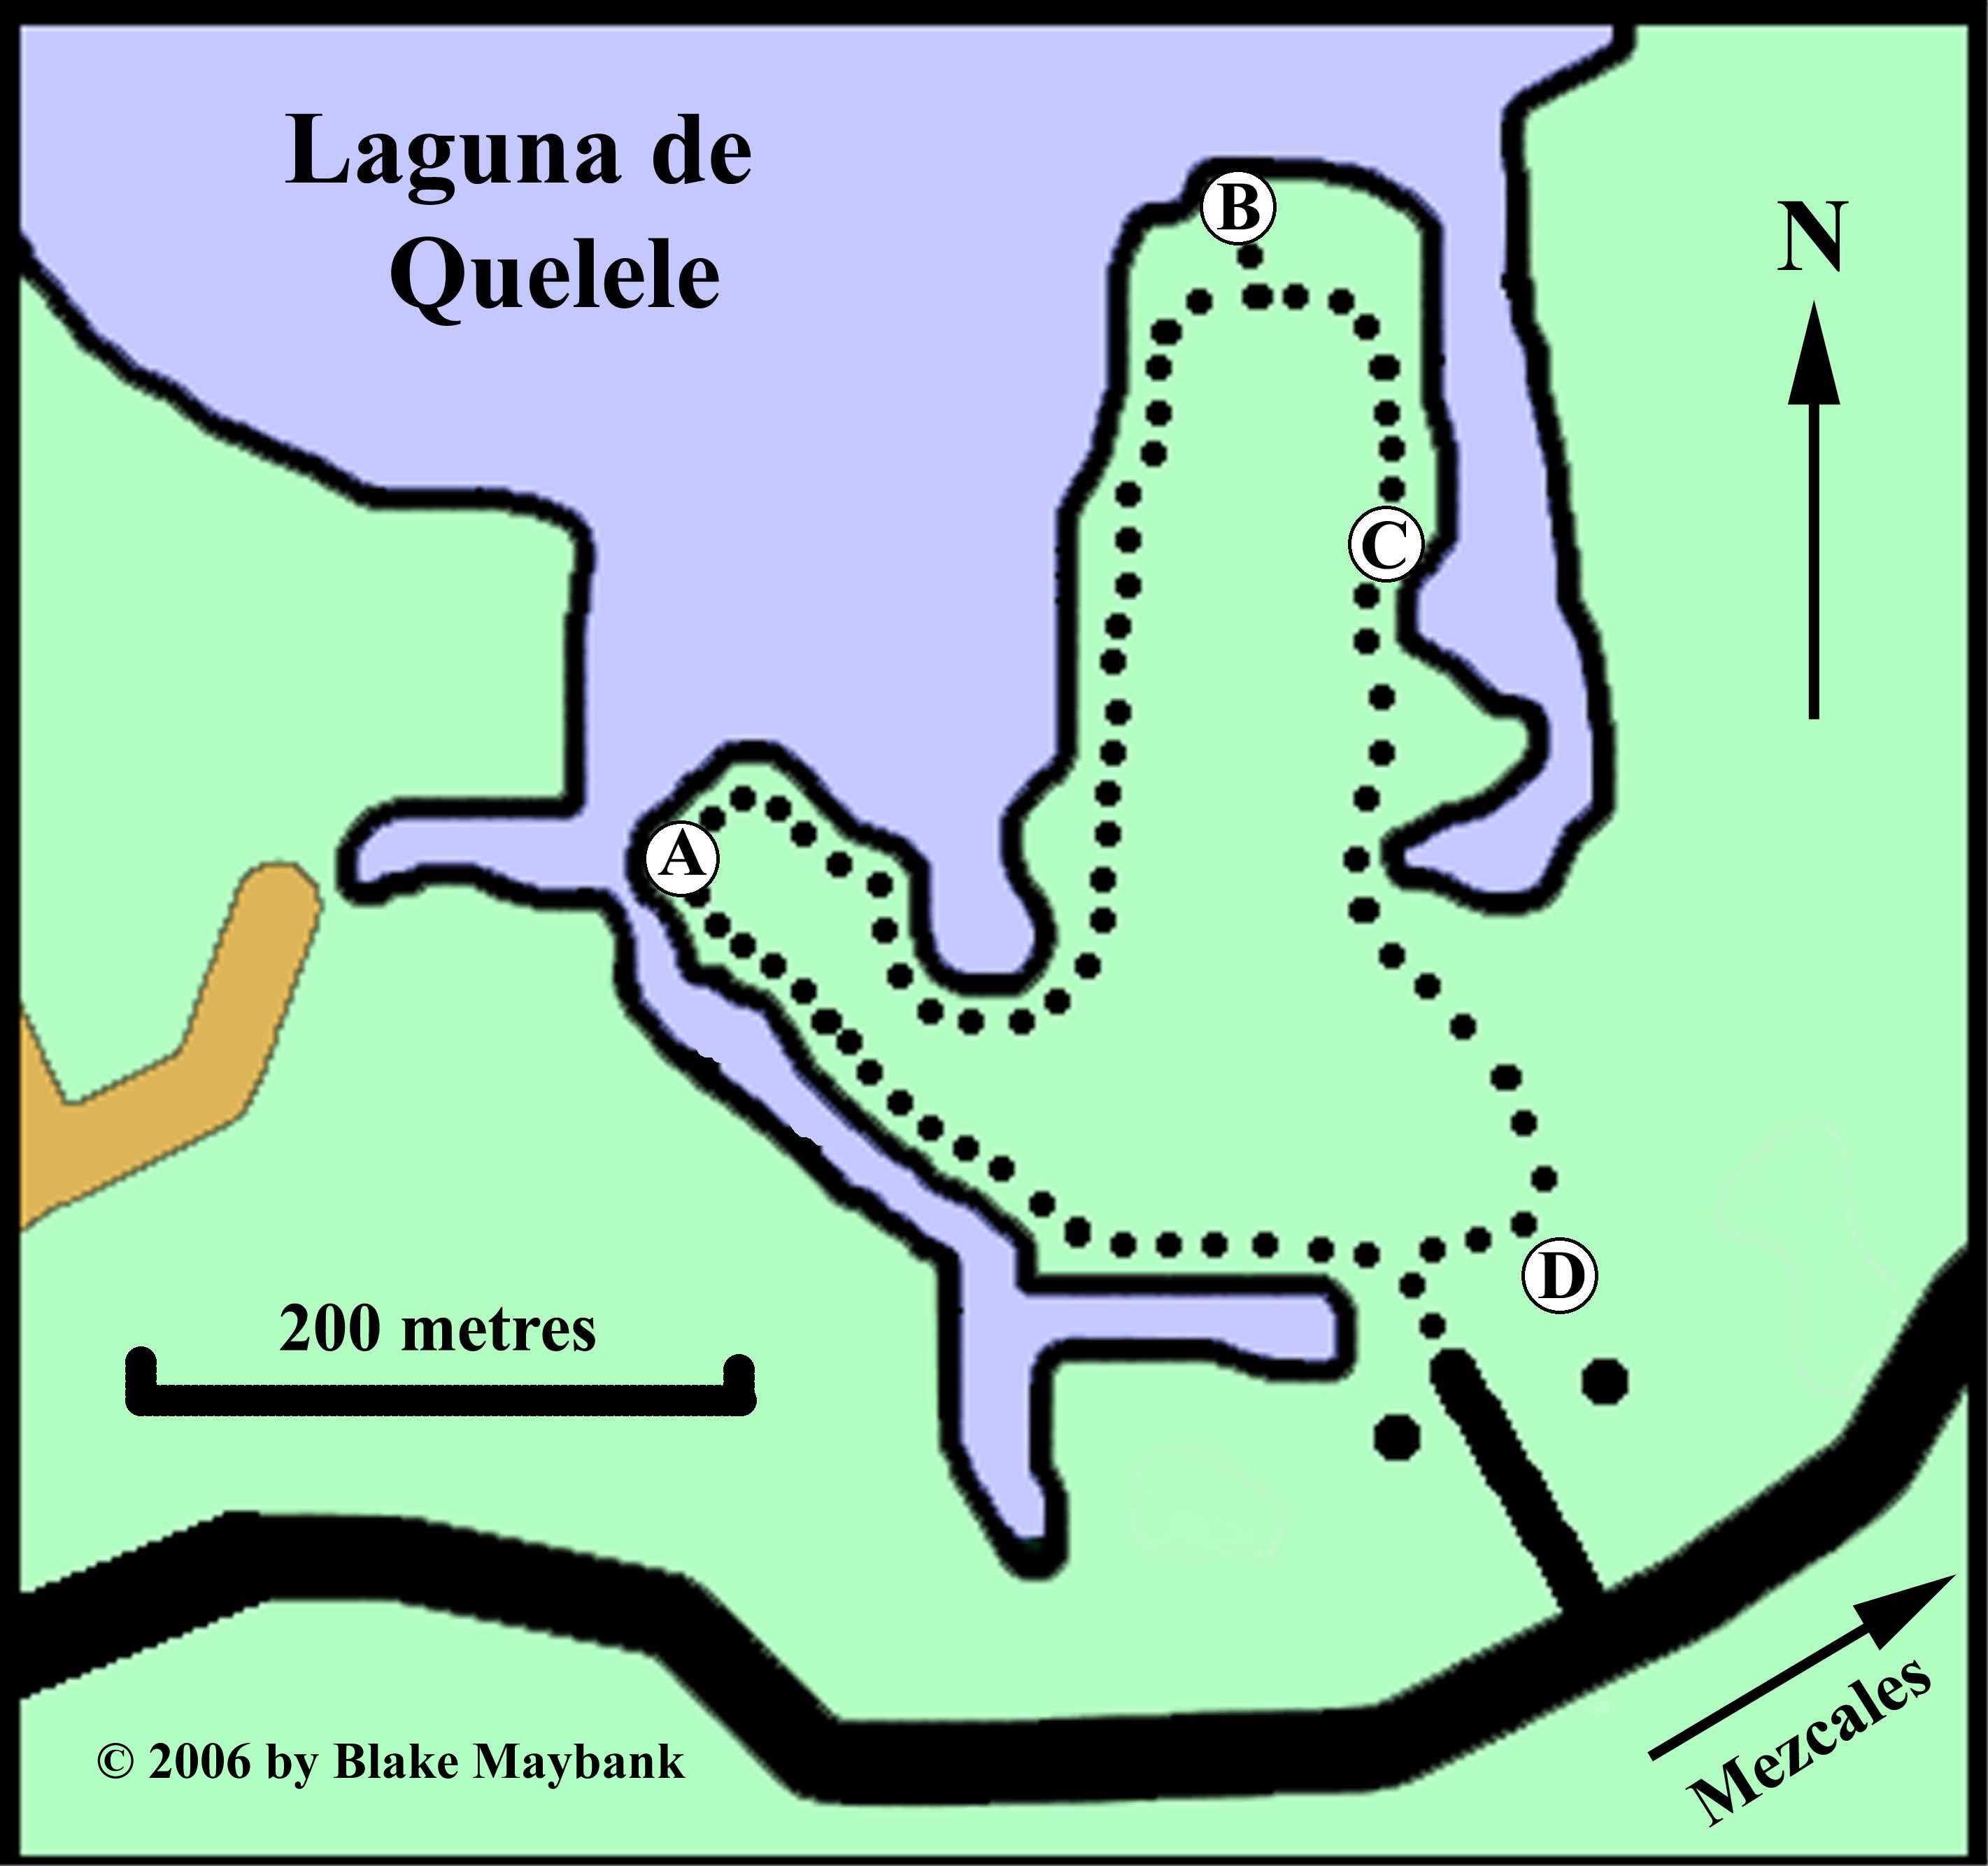 Close up of Laguna de Quelele area